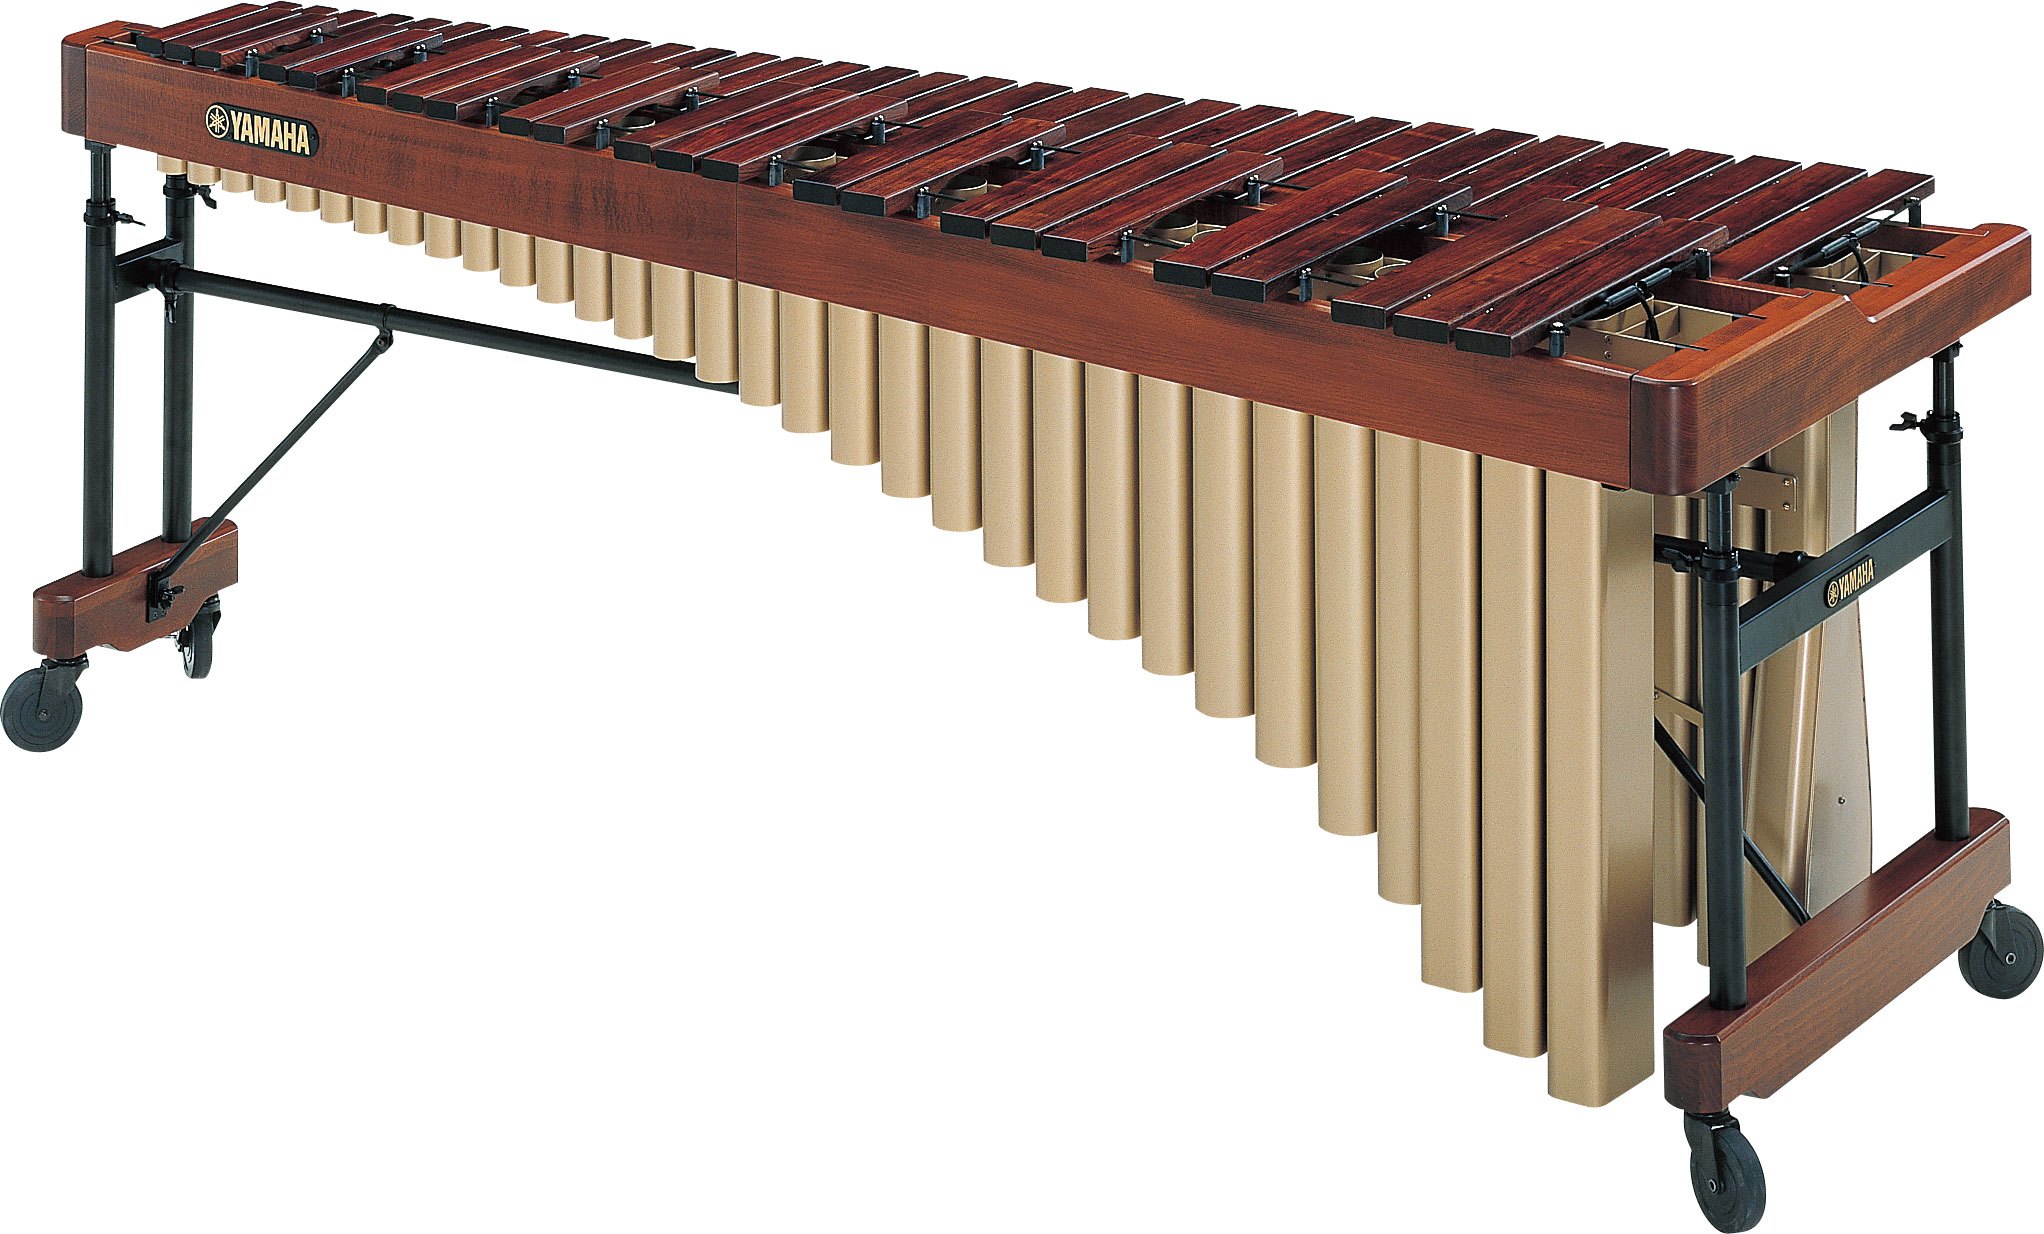 marimba instrument